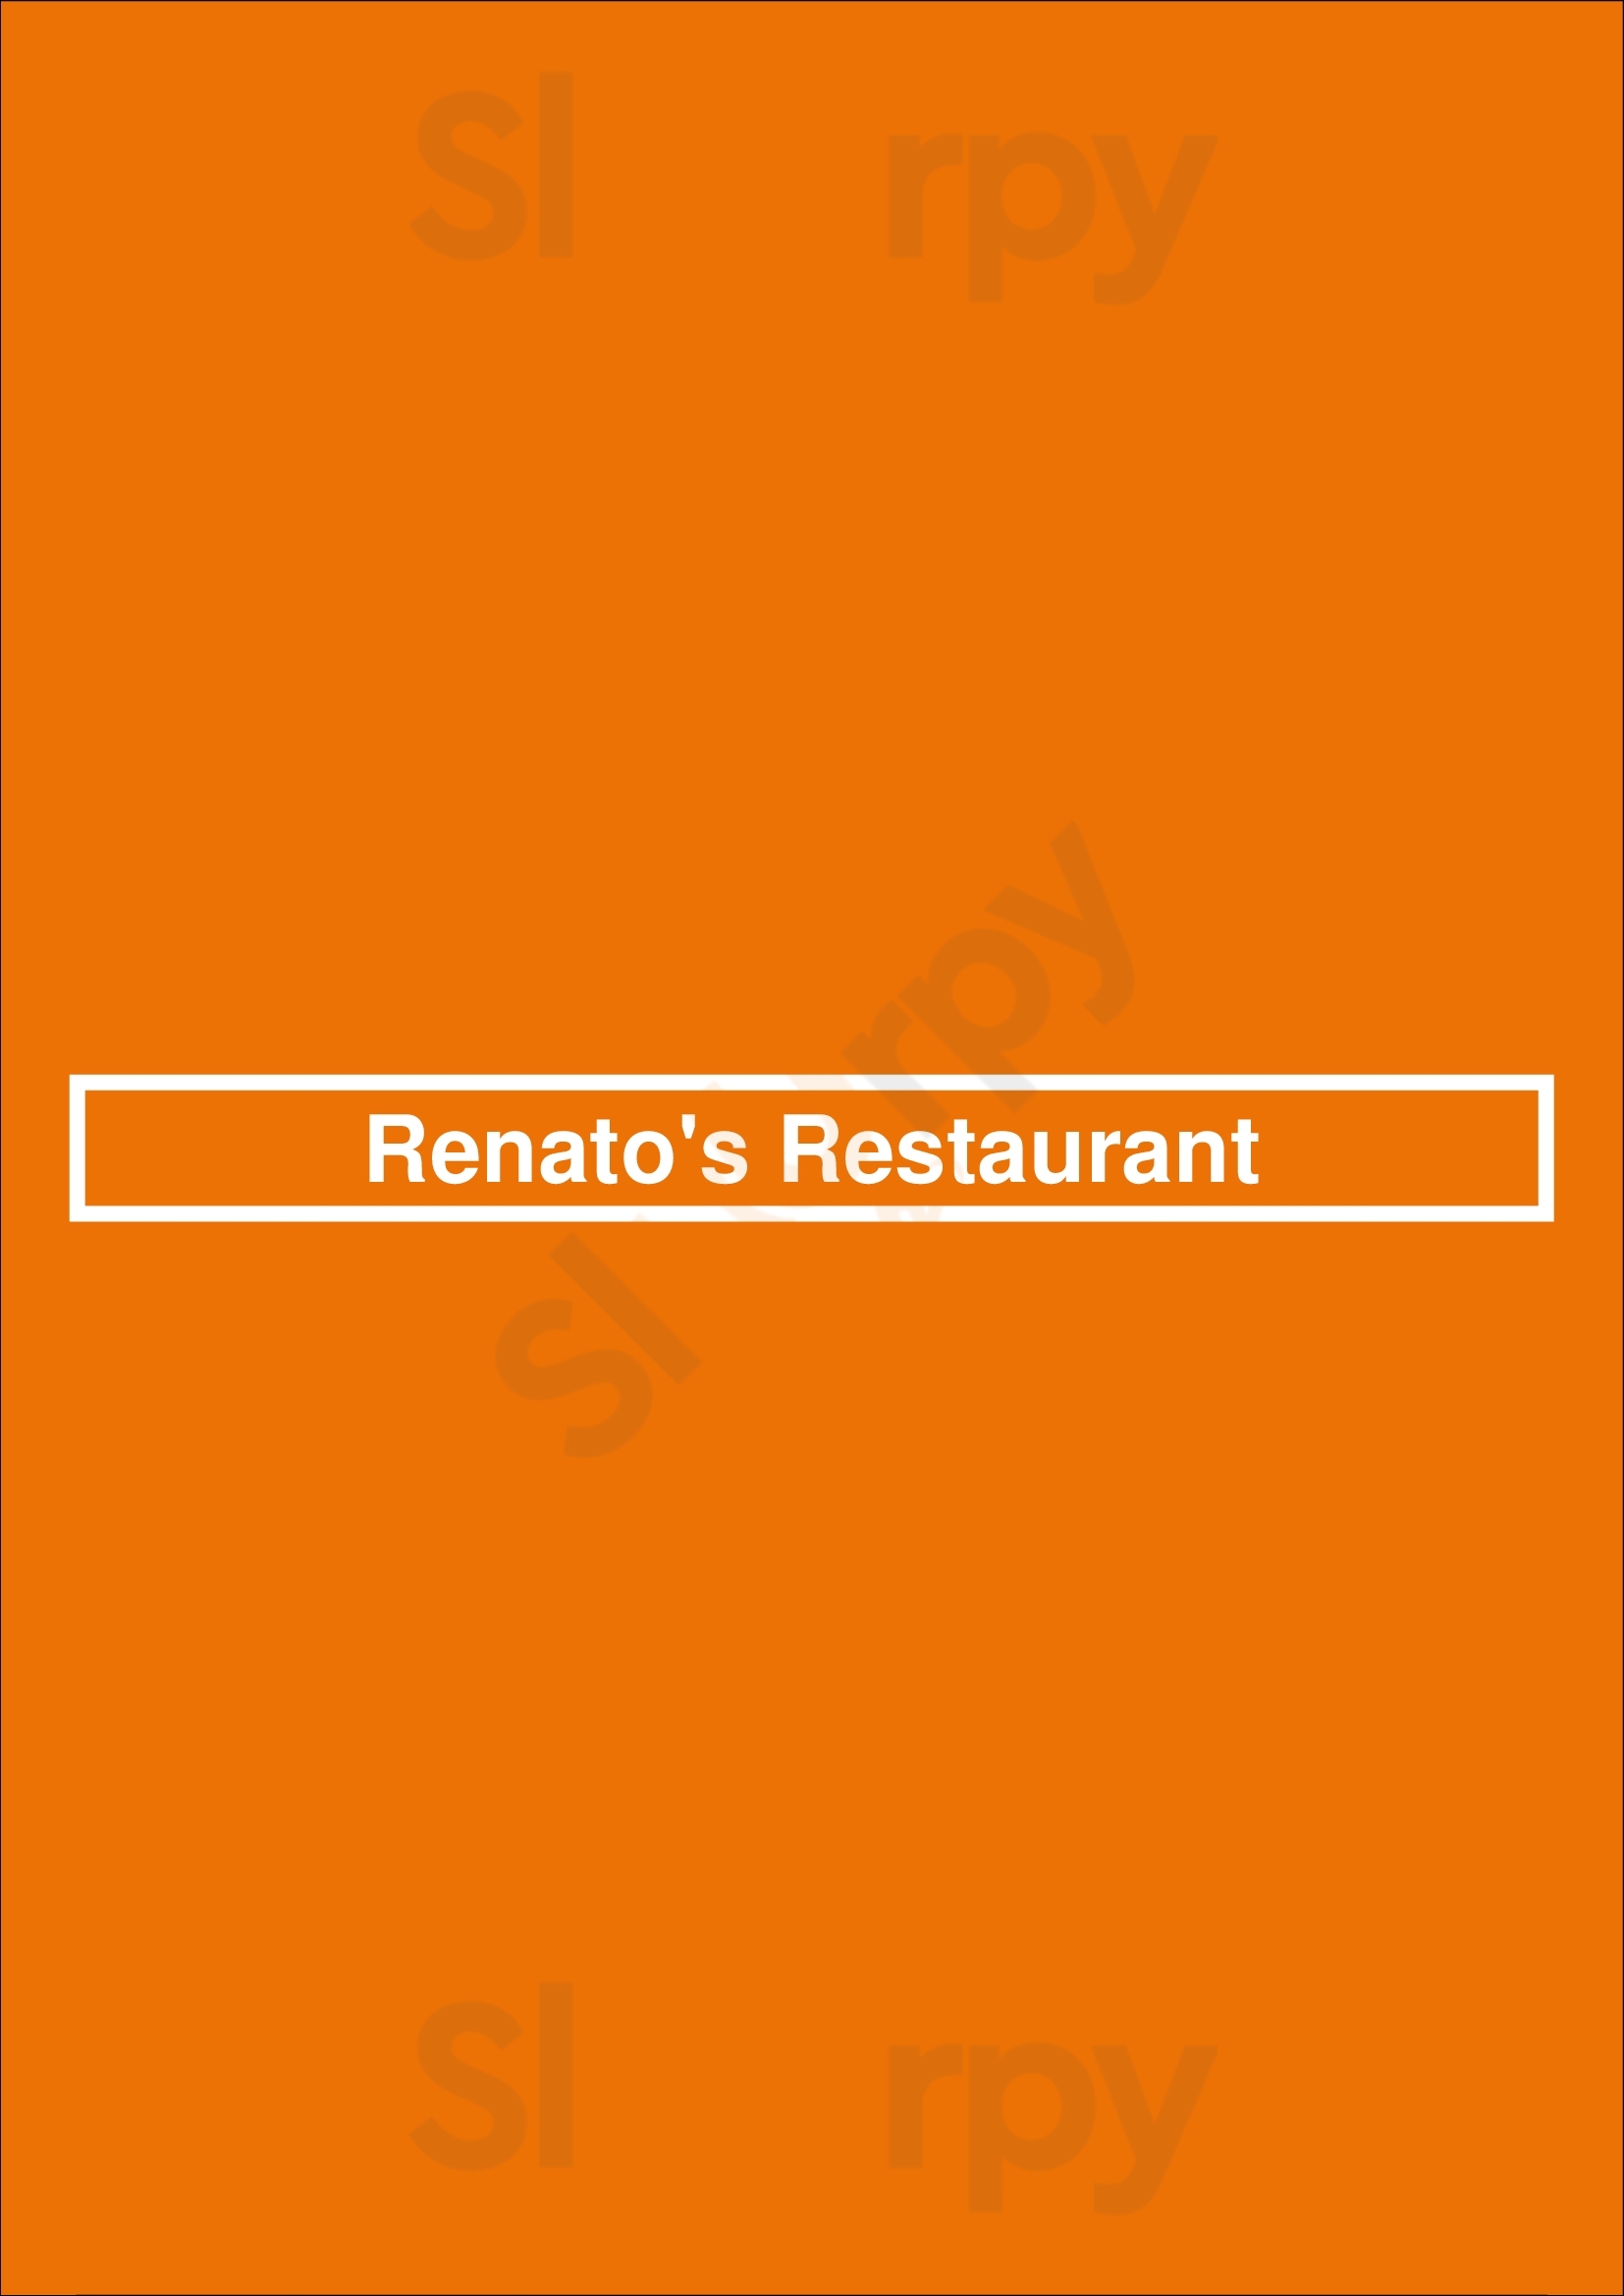 Renato's Restaurant London Menu - 1